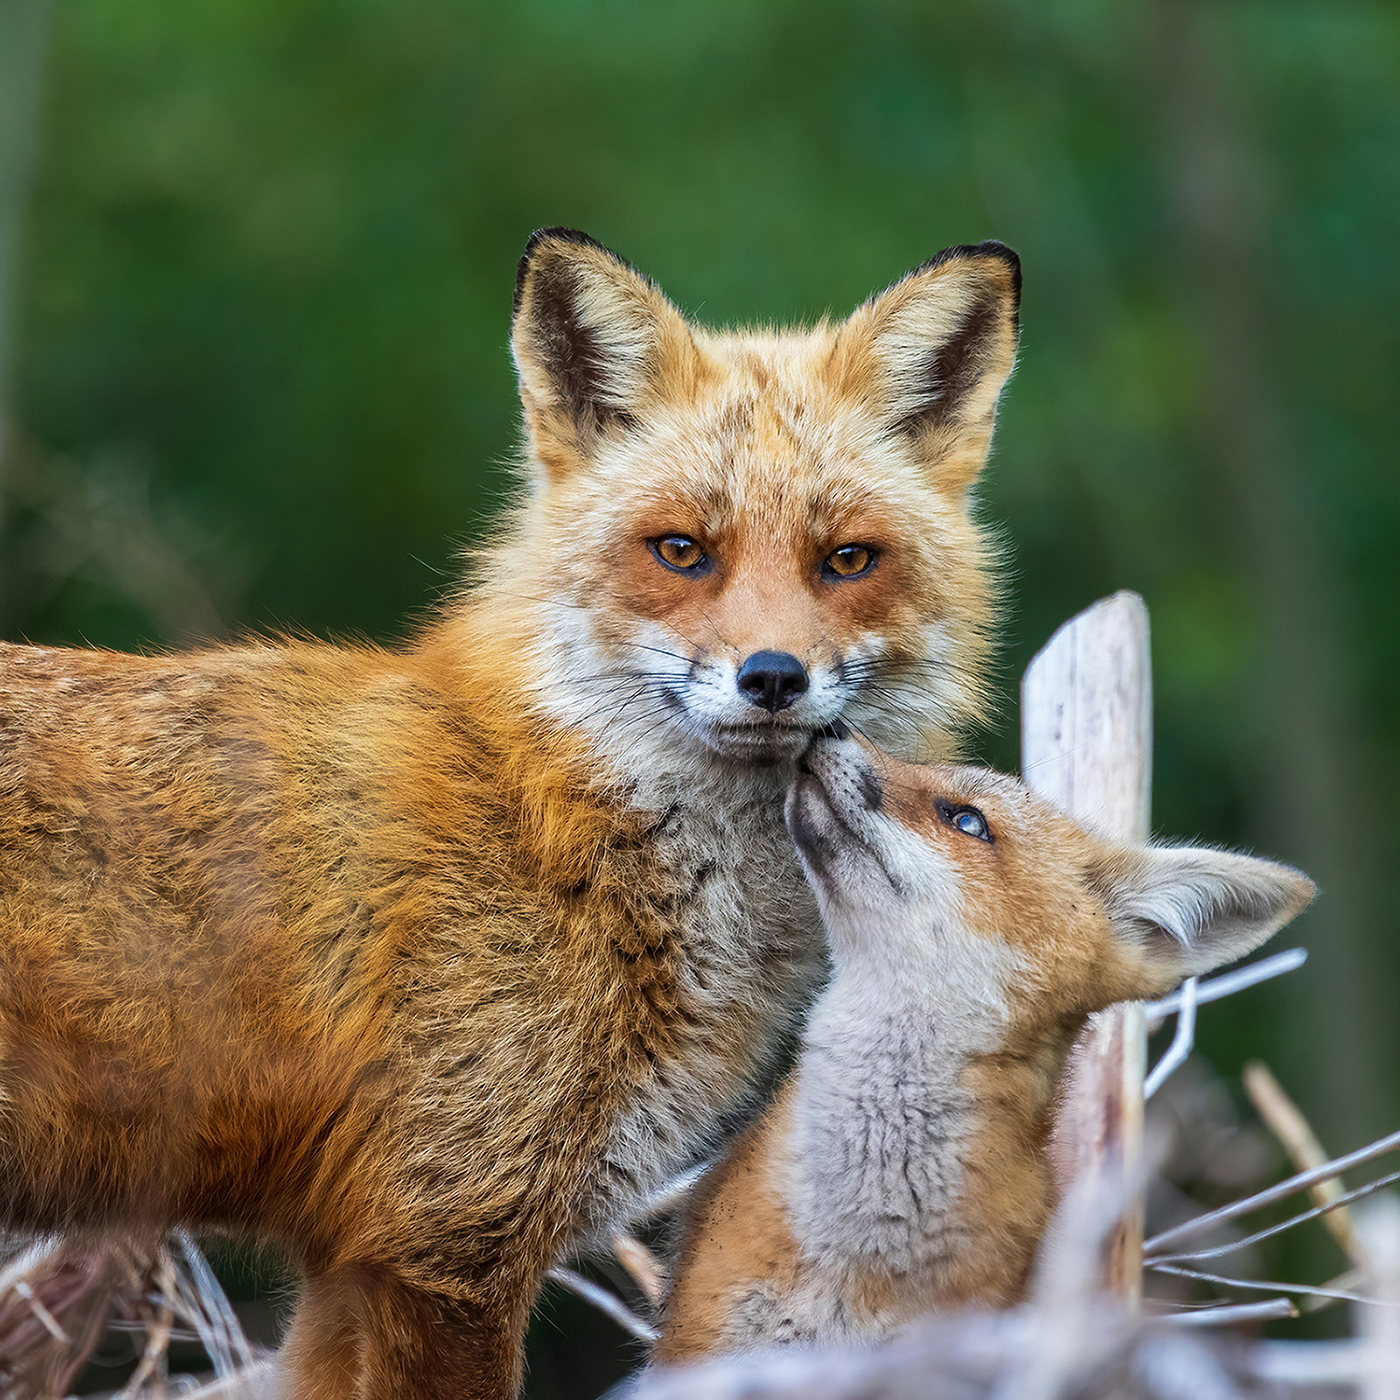 Foxes in Focus, Part 1